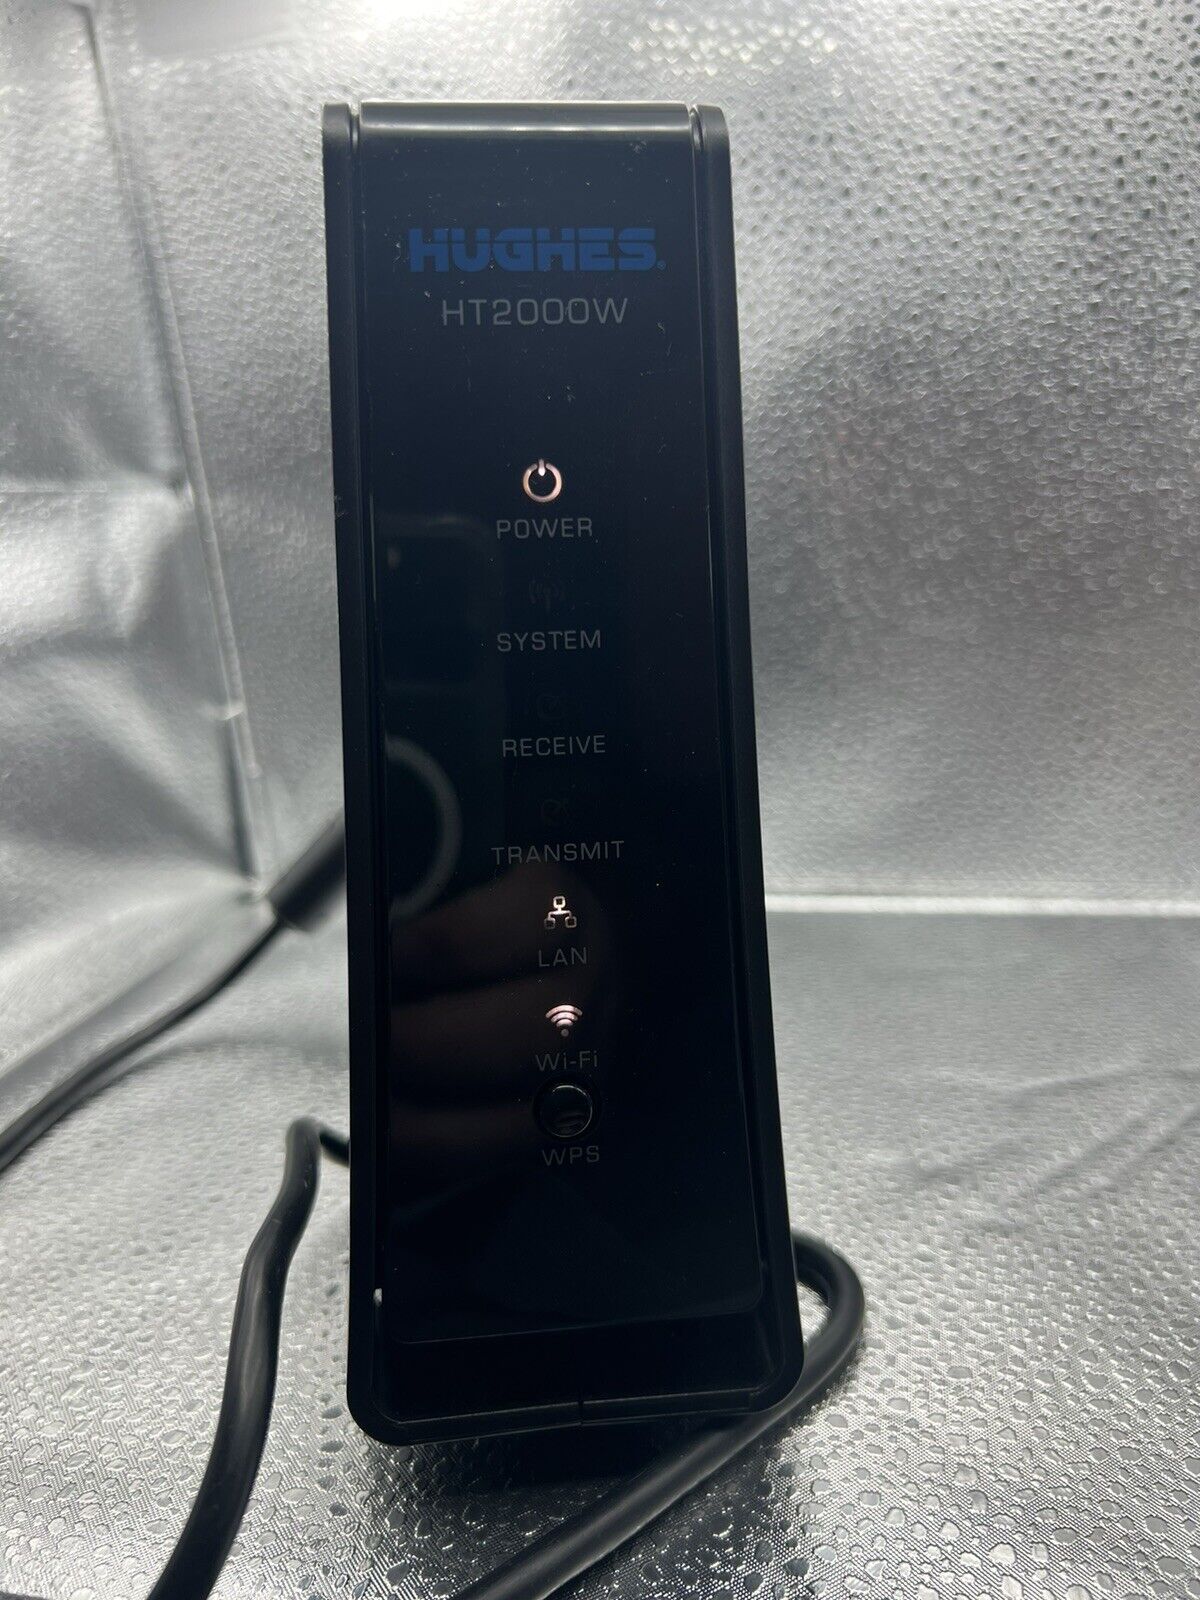  HughesNet HT2000W Black Satellite Dual Band 2.4Ghz-5Ghz Internet Modem Router